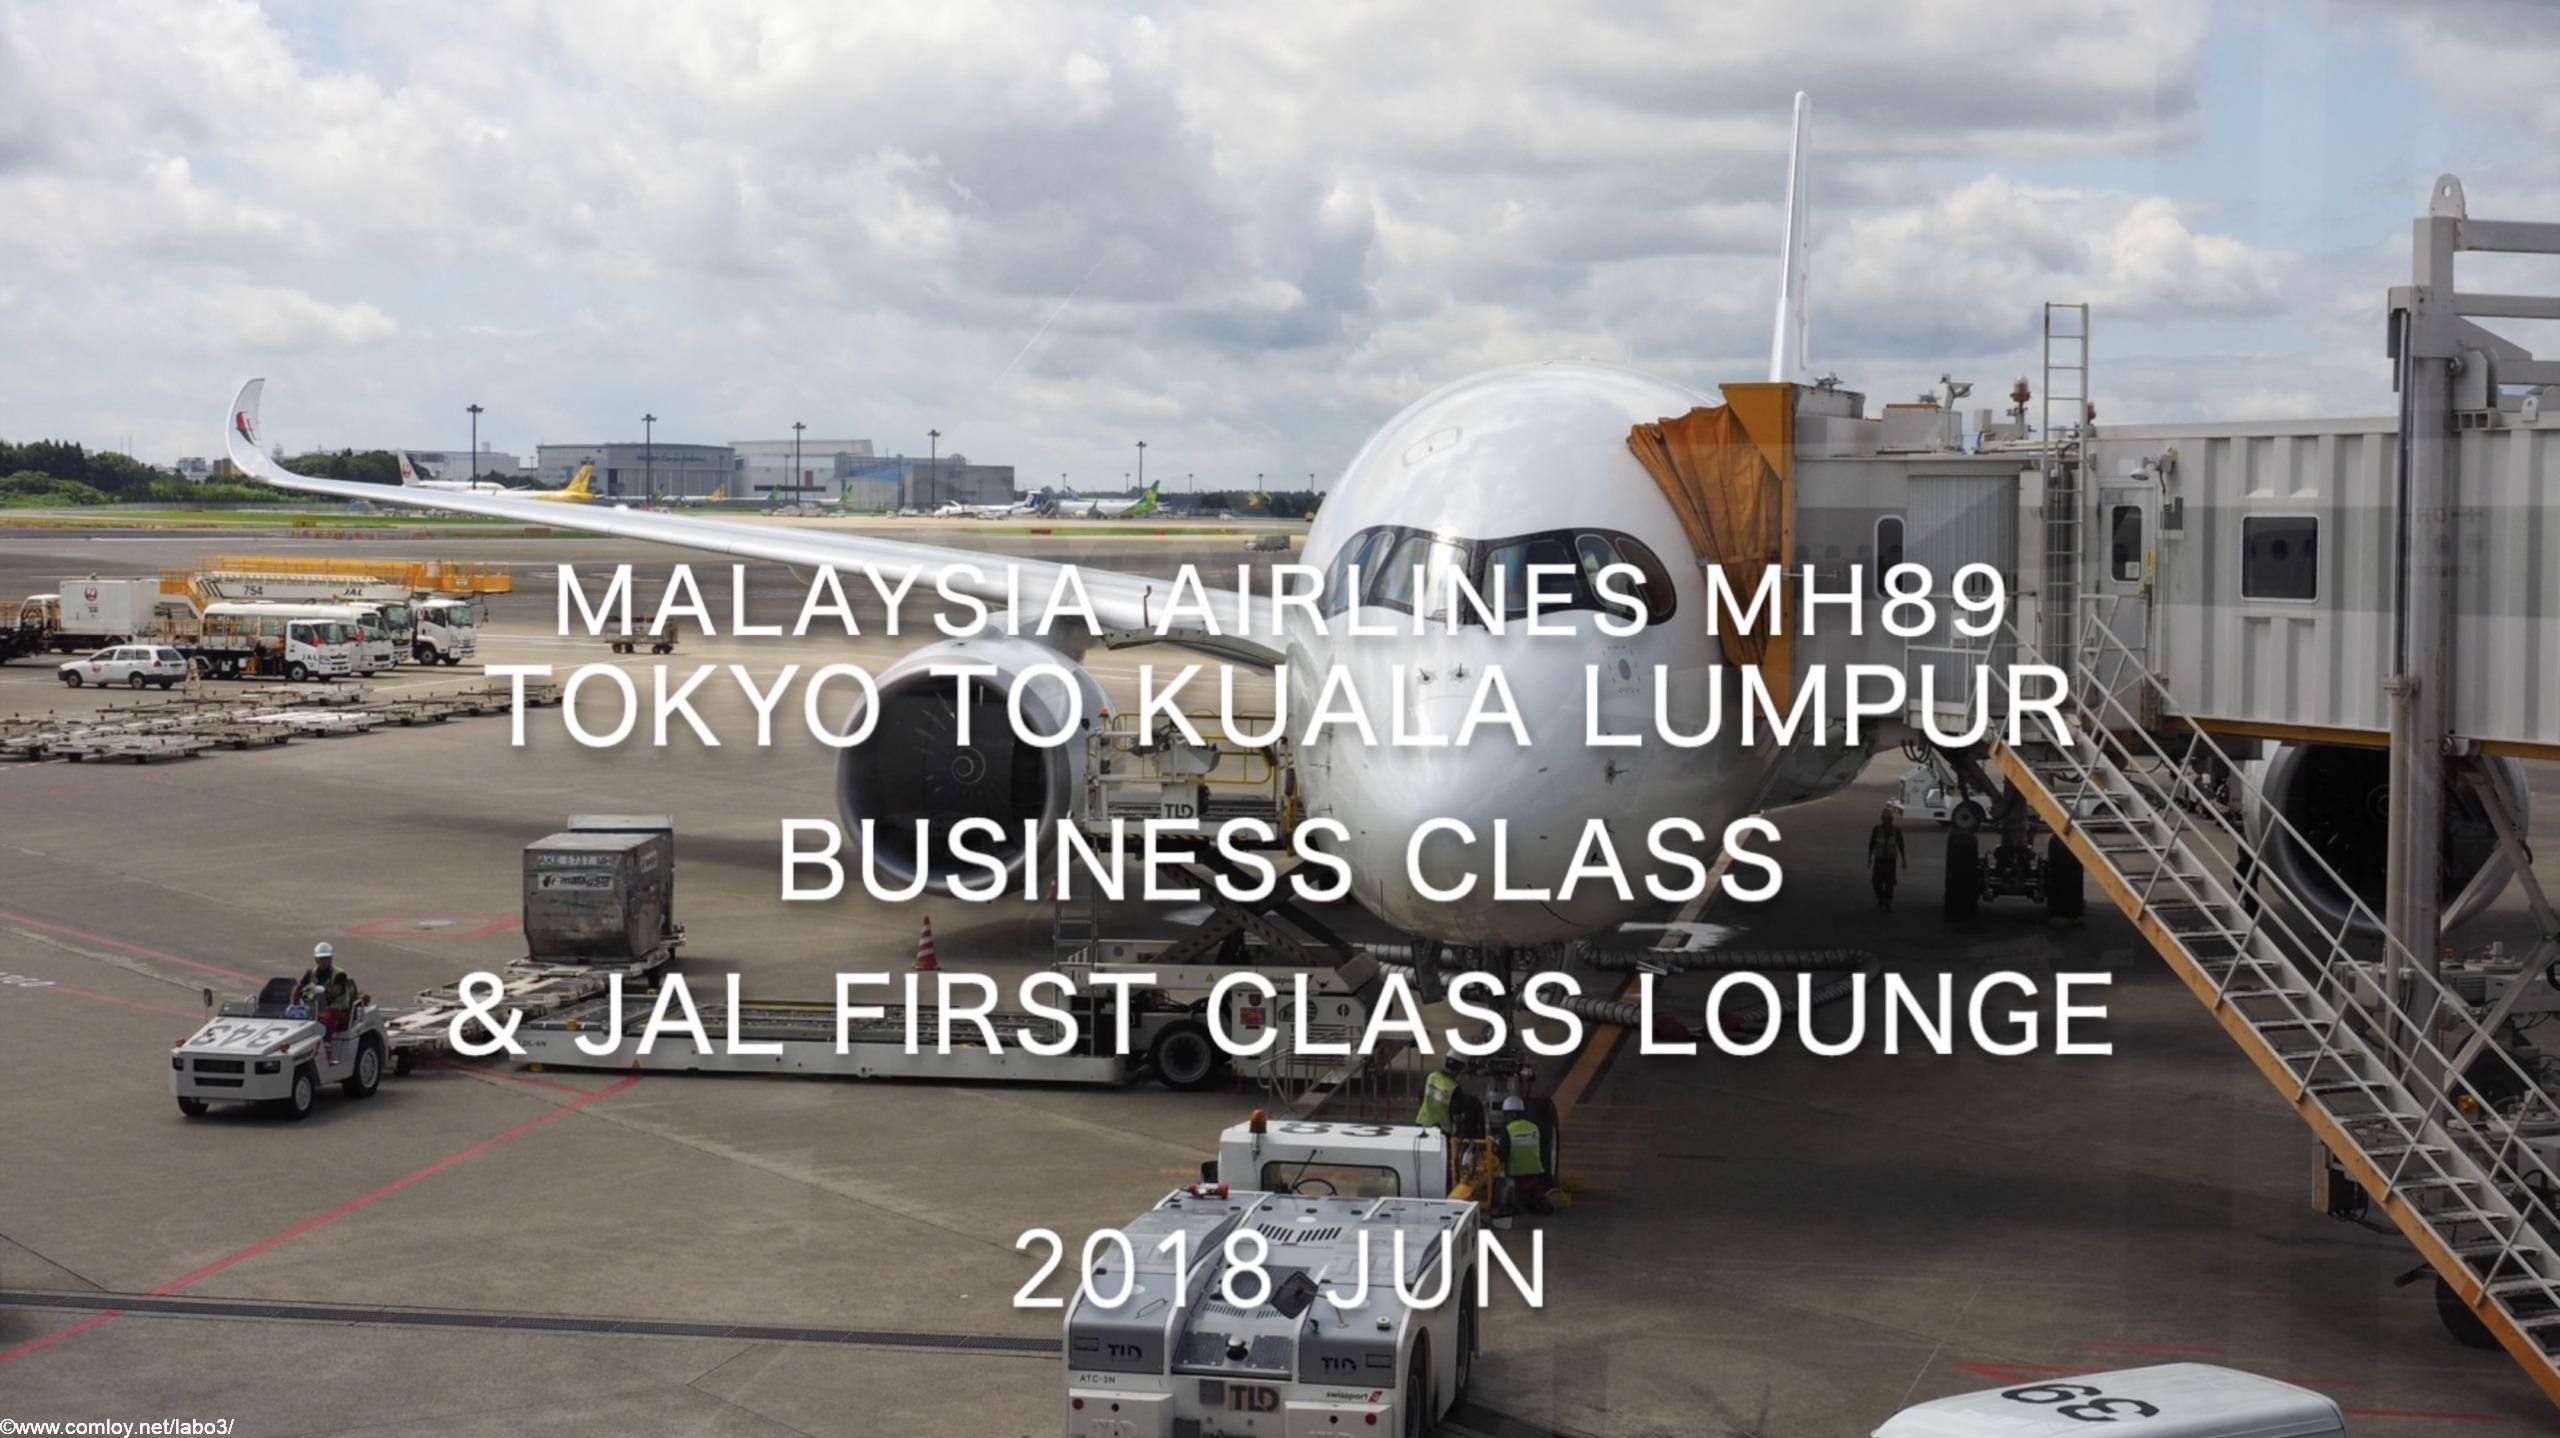 【Flight Report】Malaysia Airlines MH89 TOKYO NARITA to Kuala Lumpur Business Class and JAL FIRST CLASS Lounge 2018 JUN マレーシア航空 成田 - クアラルンプール ビジネスクラス搭乗記